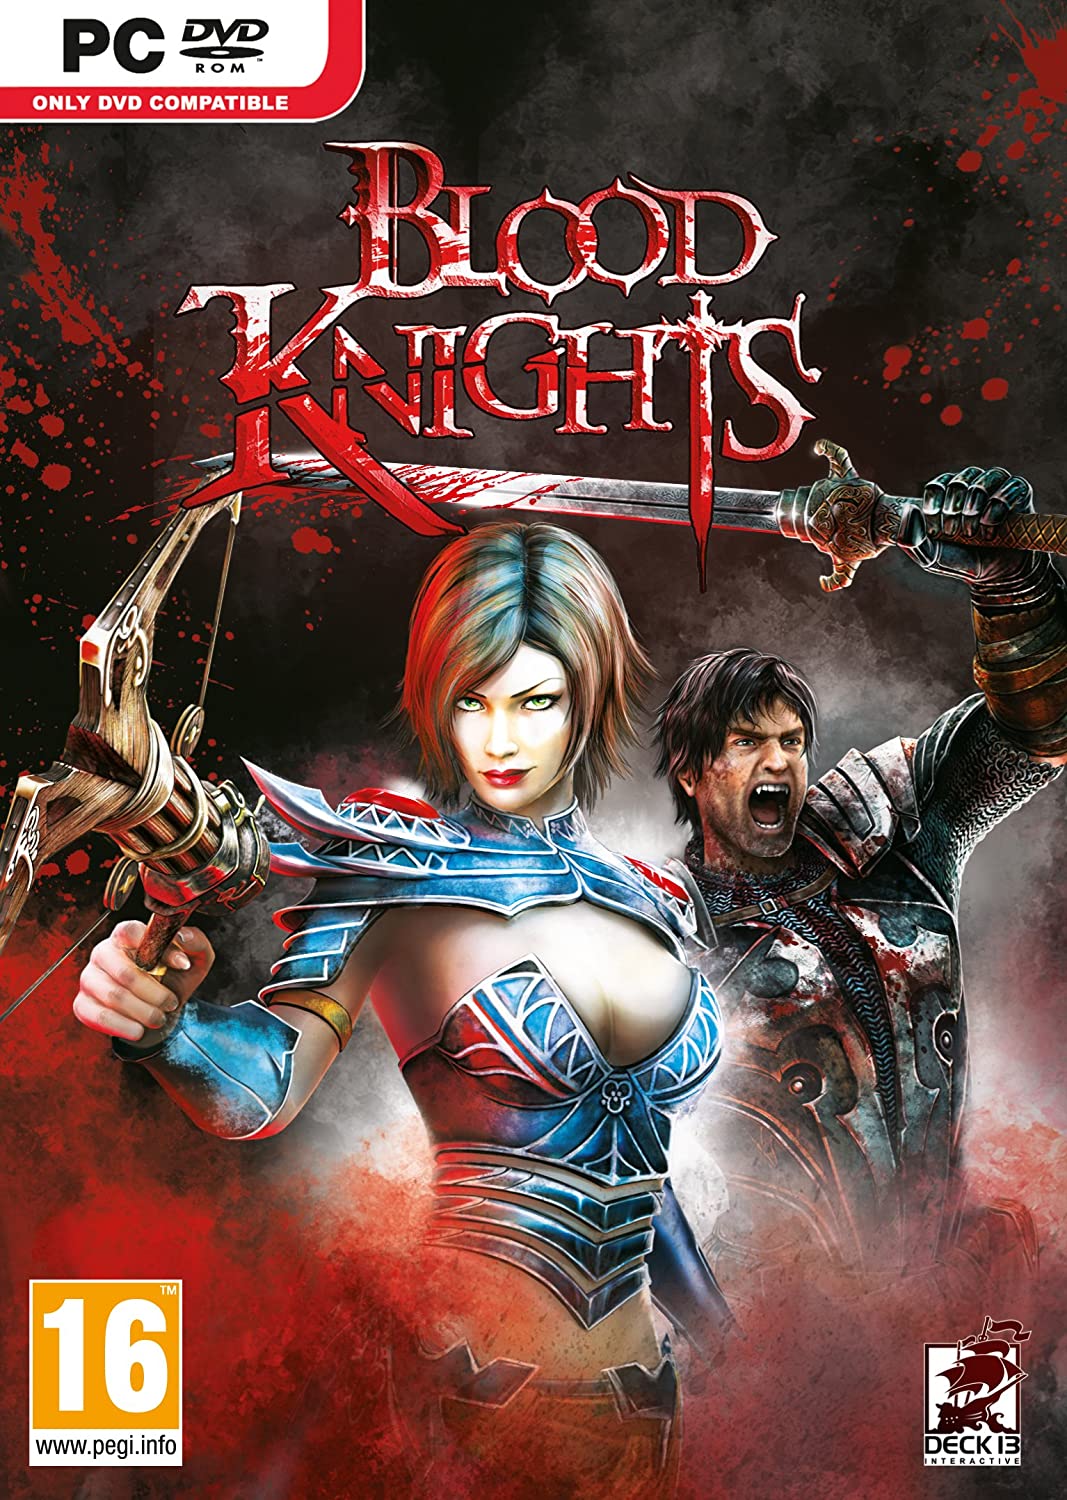 Blood Knights (PC-DVD)